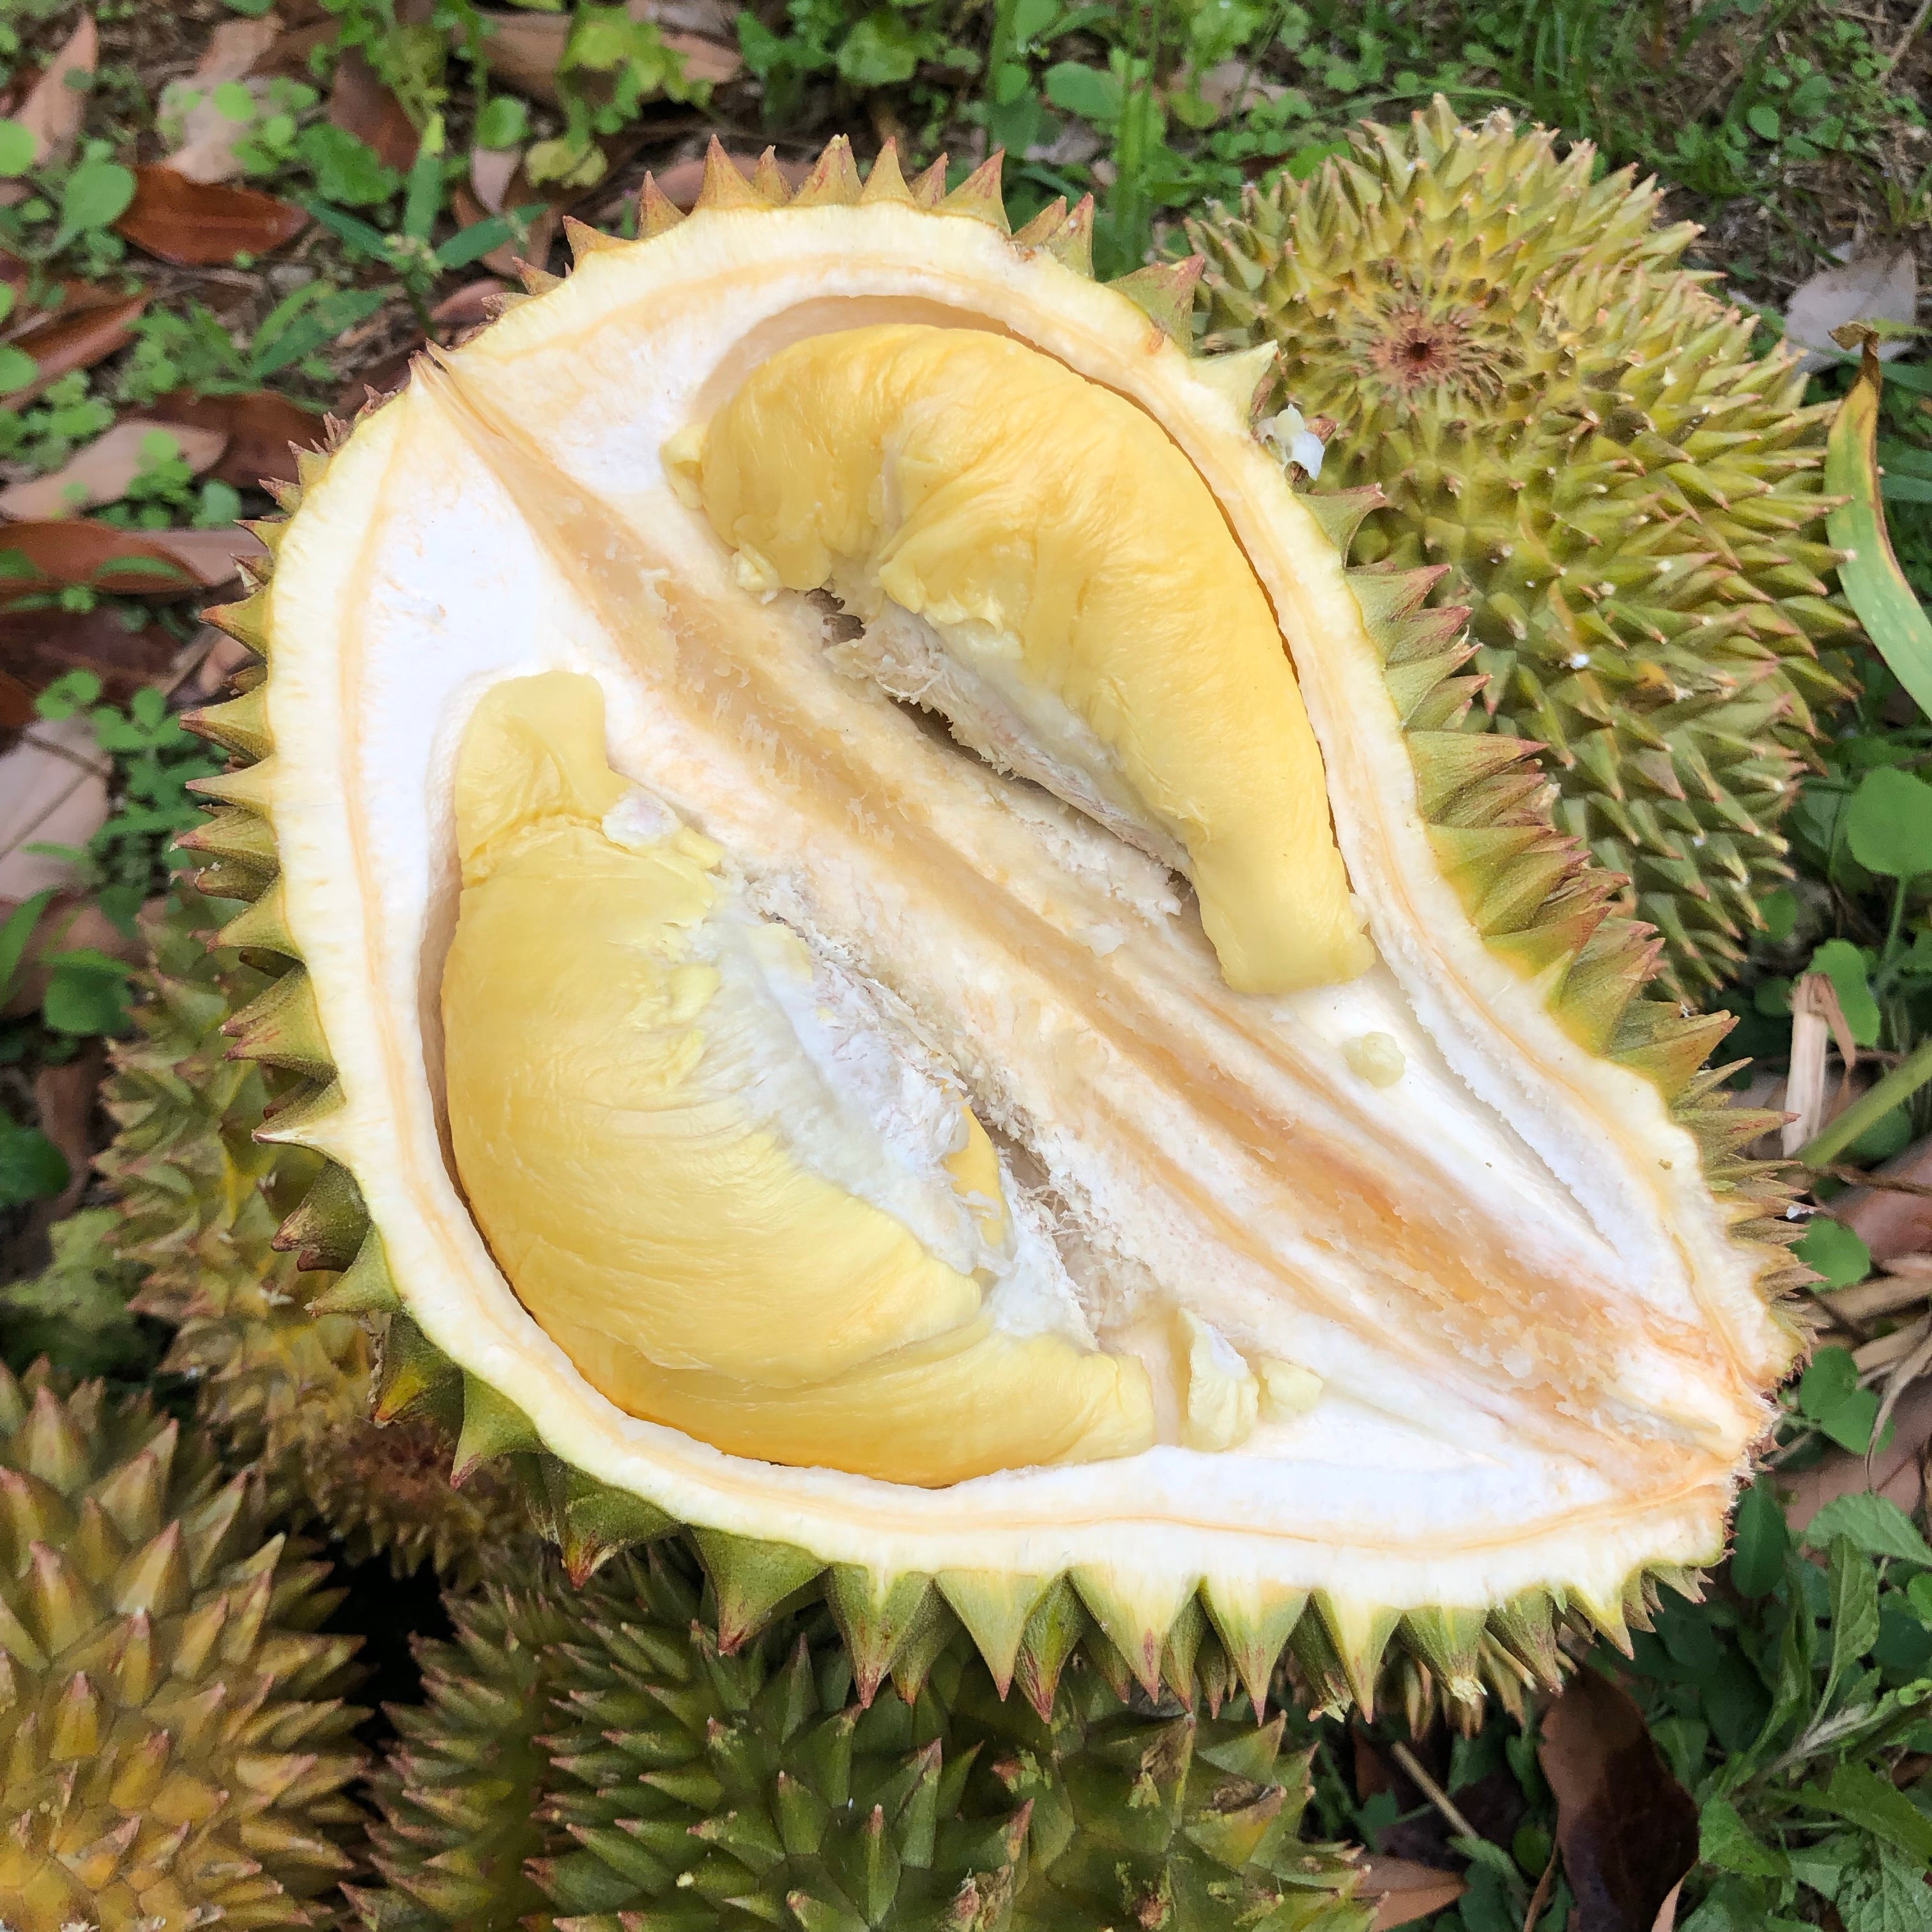 Download 610 Koleksi Gambar Durian Chanee Paling Baru Gratis